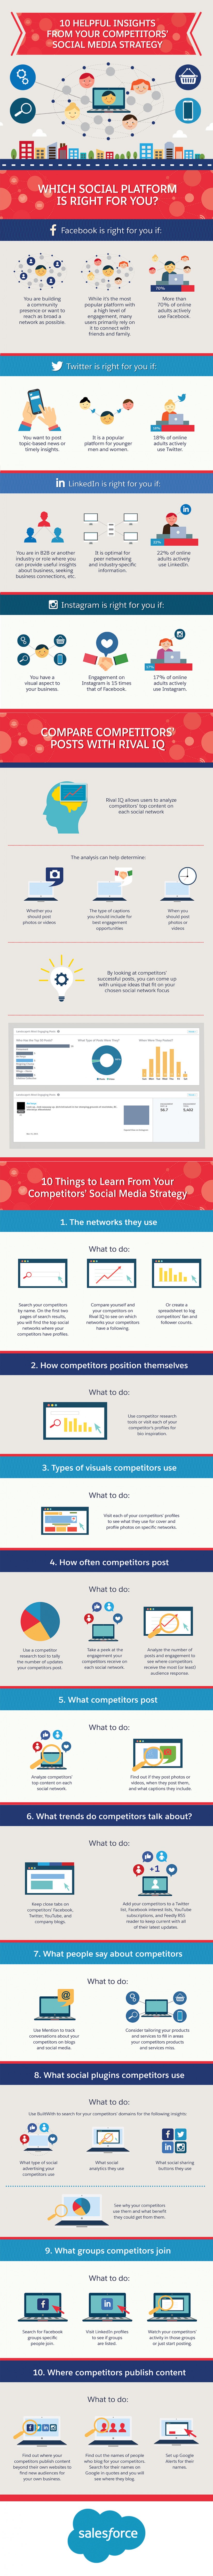 Infographie 218 - 10 tips social media